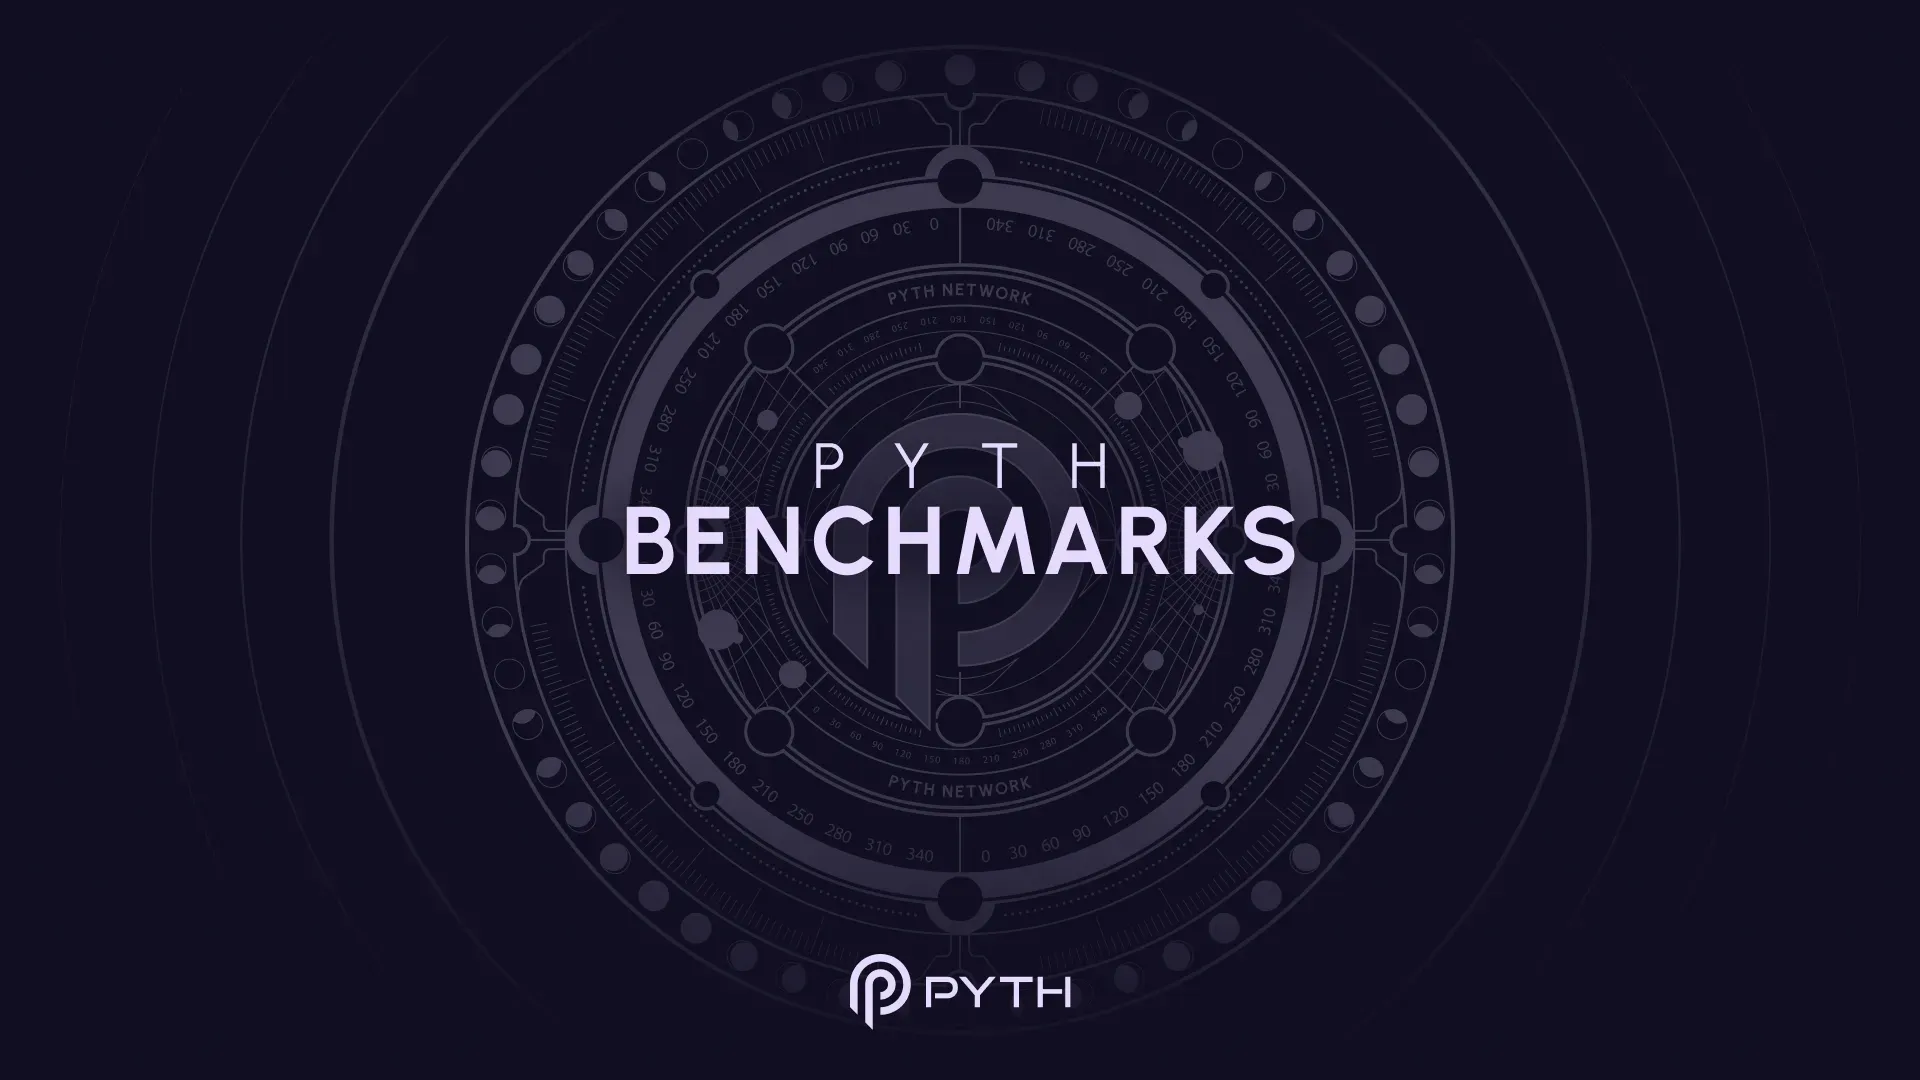 Introducing Pyth Benchmarks